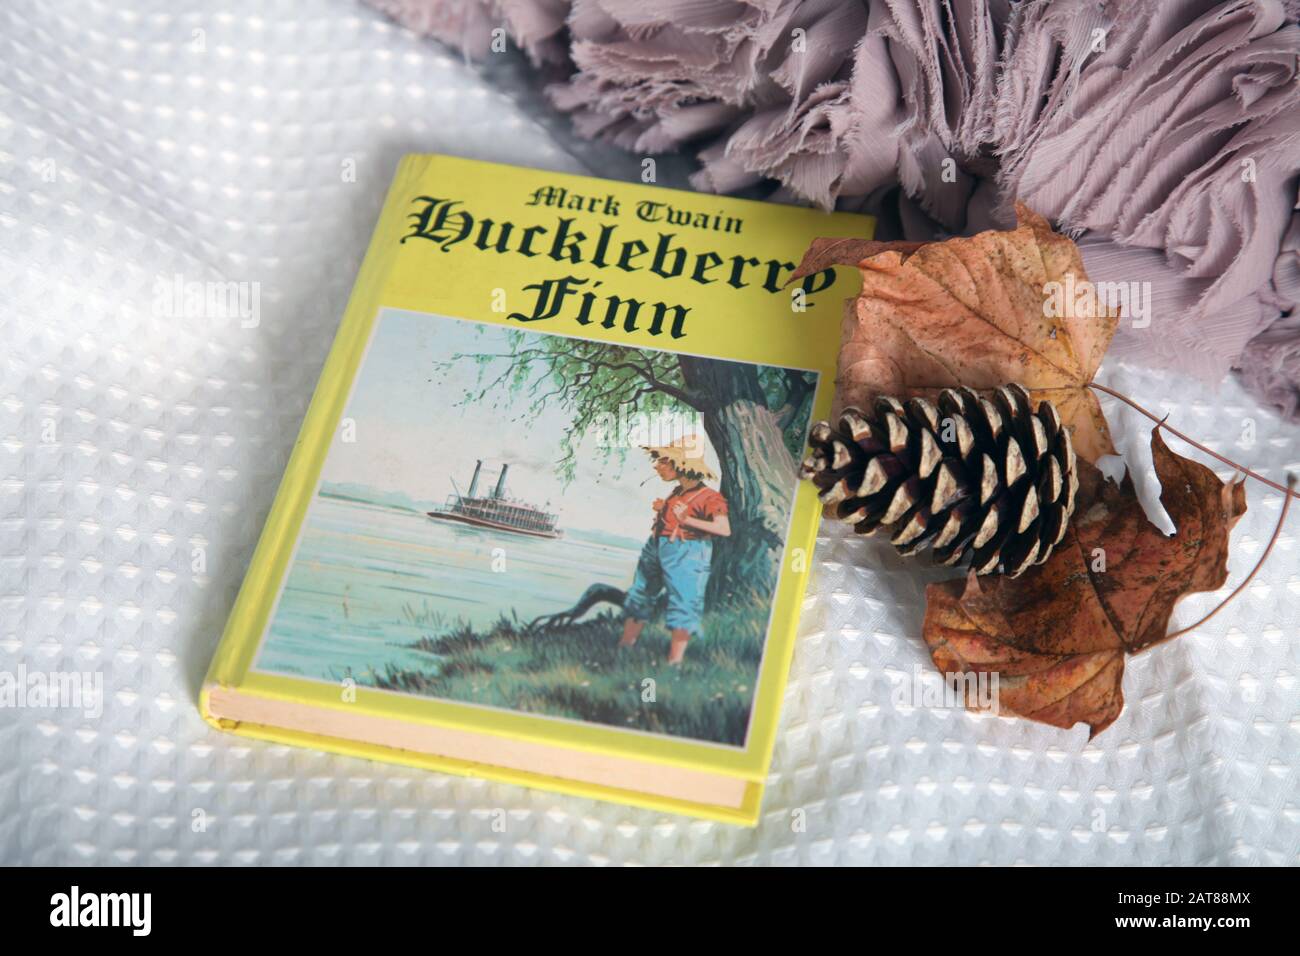 Mark Twain Huckleberry Finn hardback book cover instagram style Stock Photo